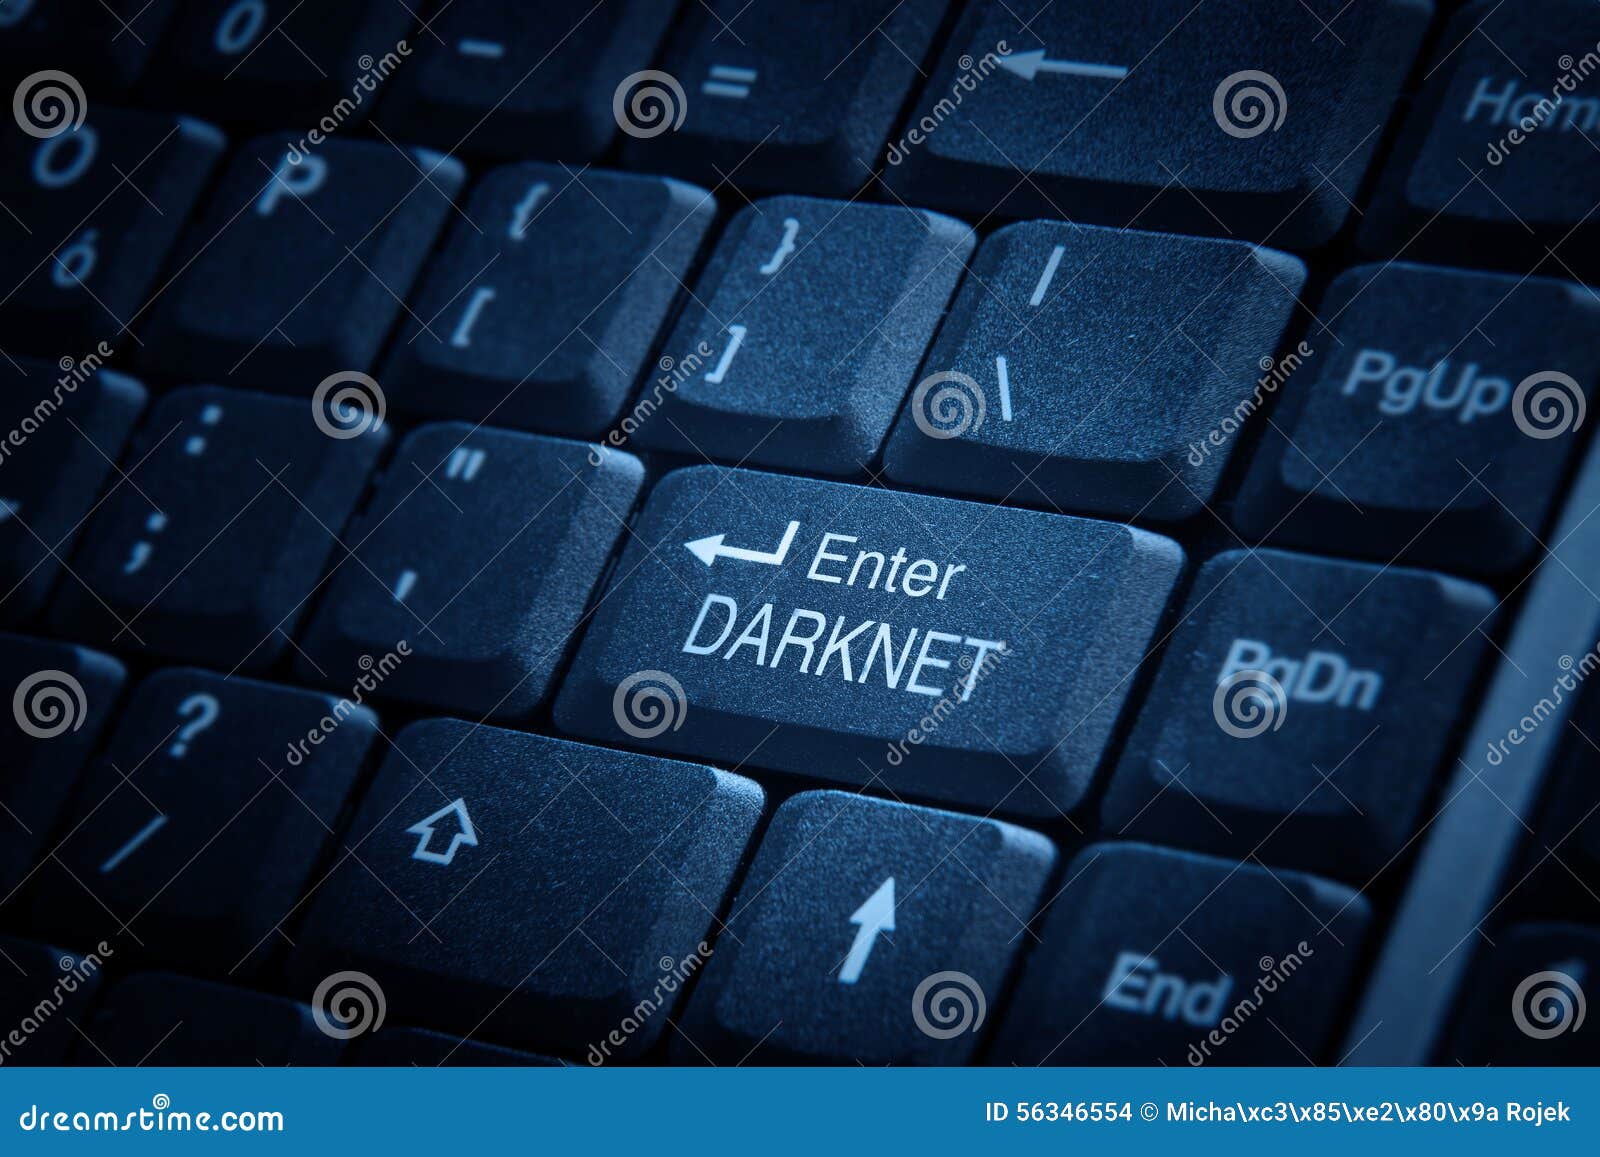 darknet enter даркнет